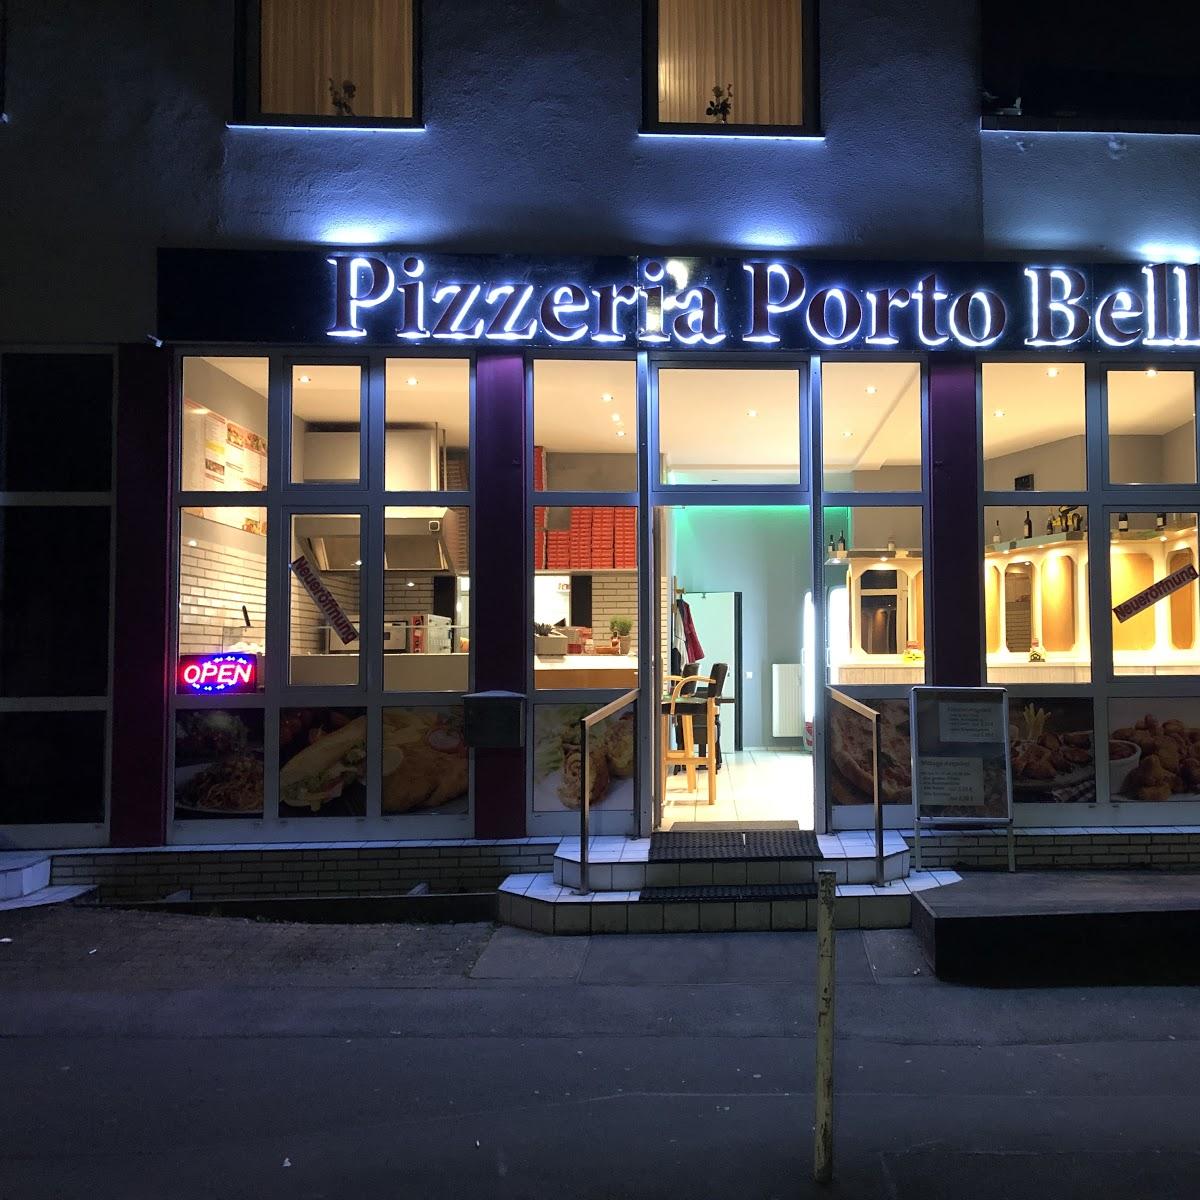 Restaurant "Pizzeria Porto Bello" in Dortmund